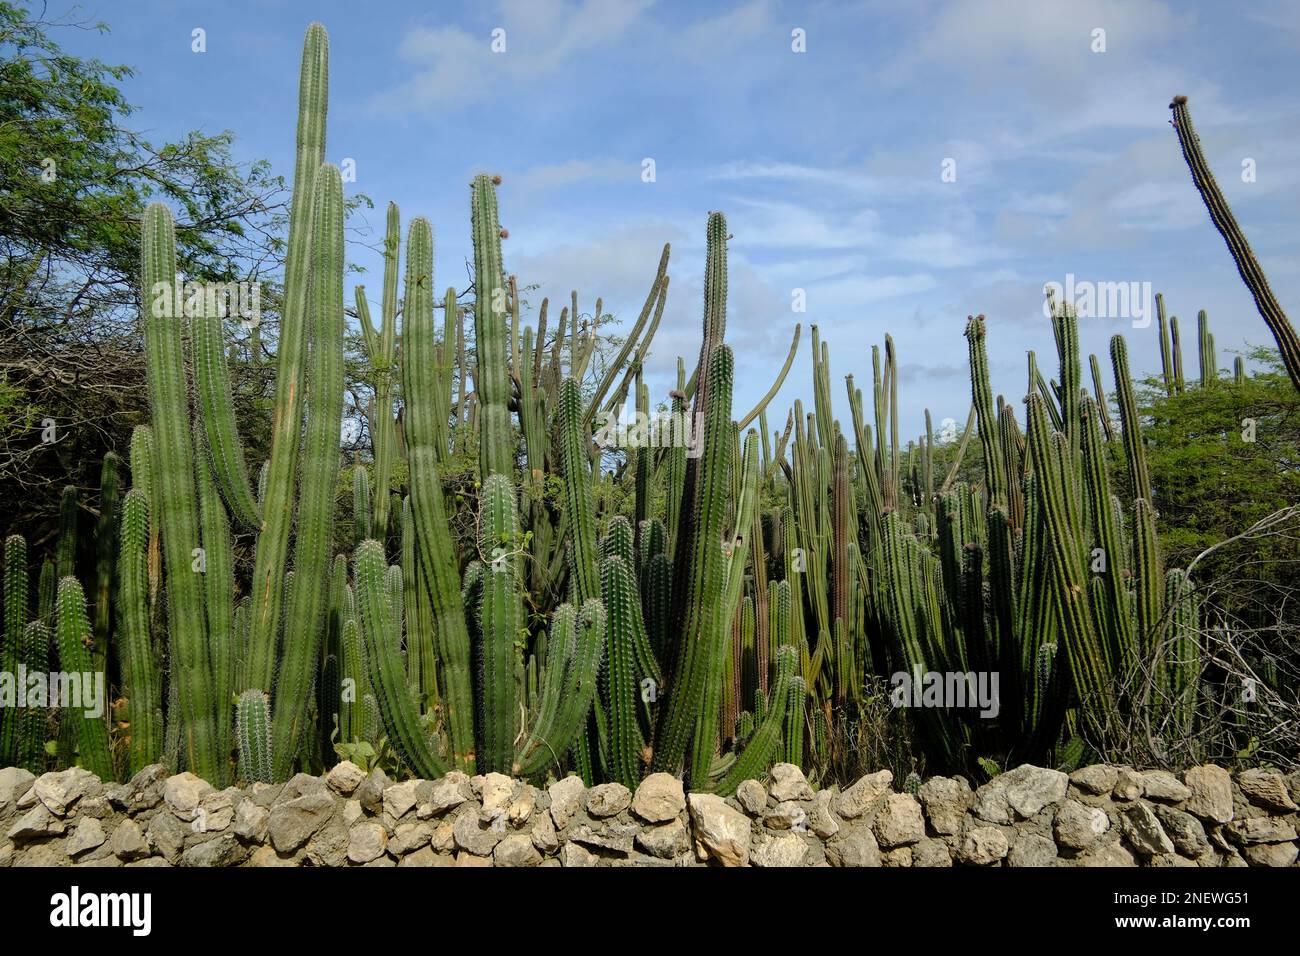 Giant Cactus on the semi-arid island of Aruba Stock Photo